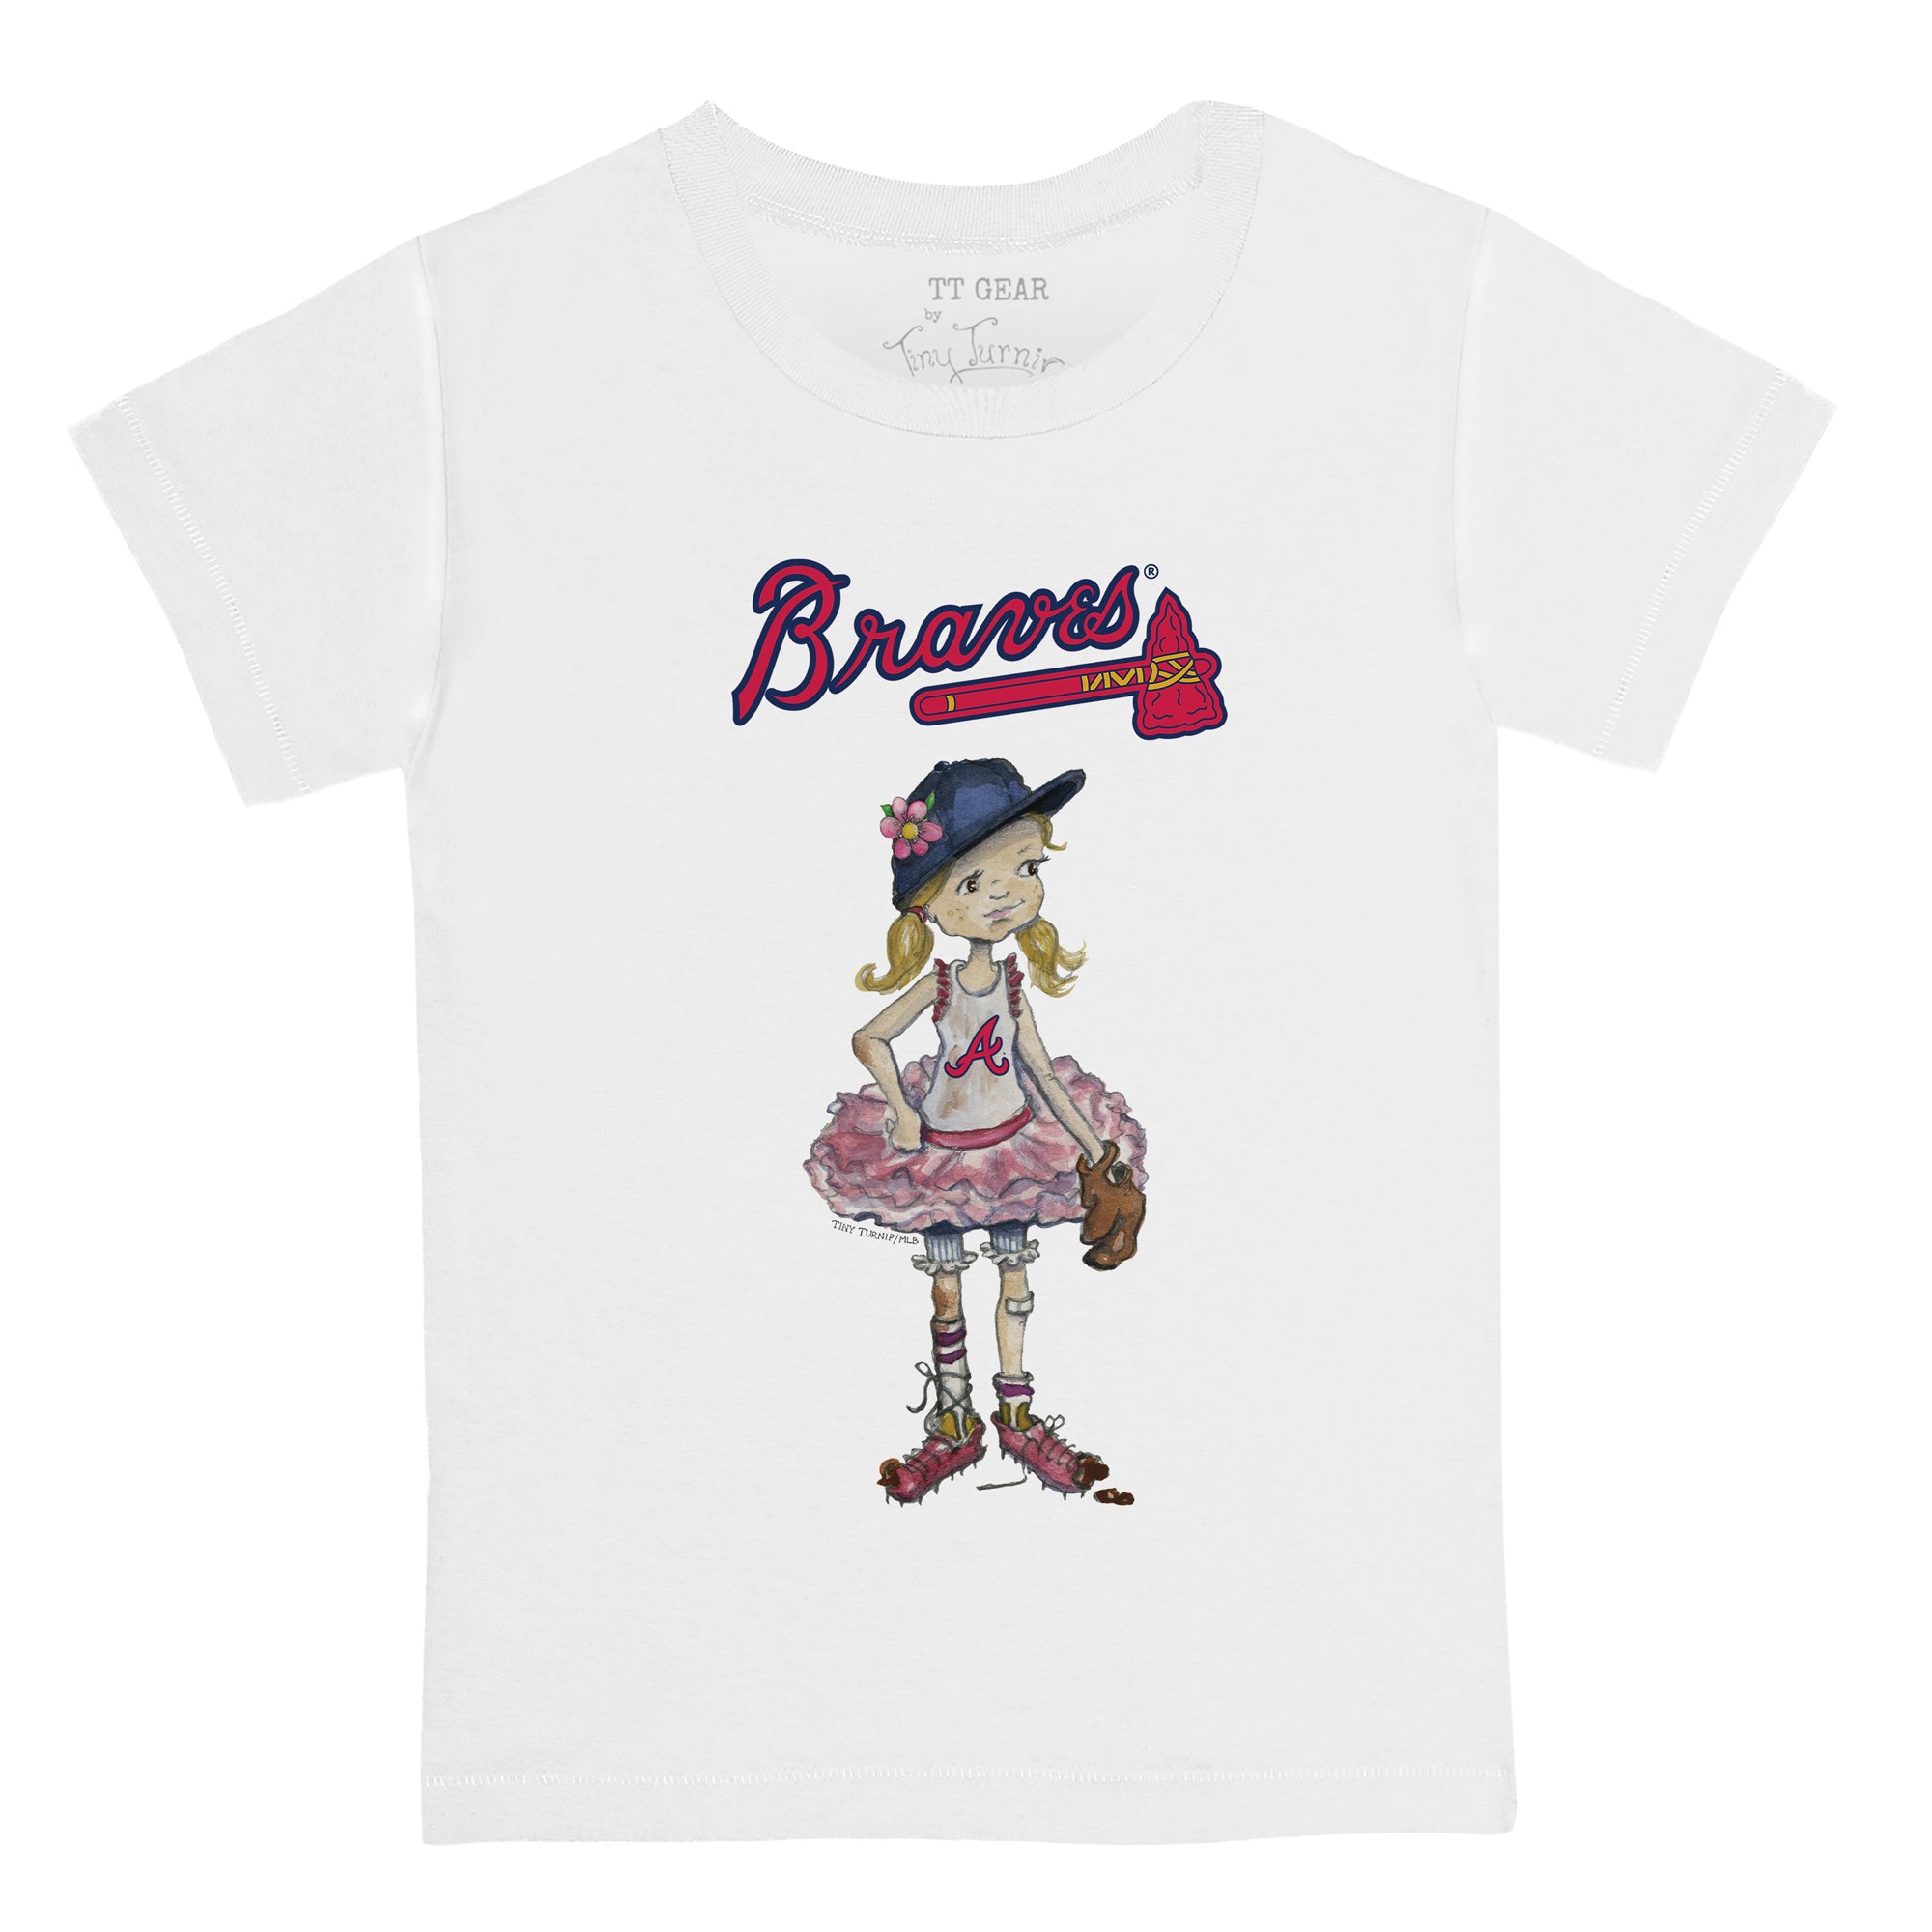 Atlanta Braves Babes Tee Shirt 5T / White